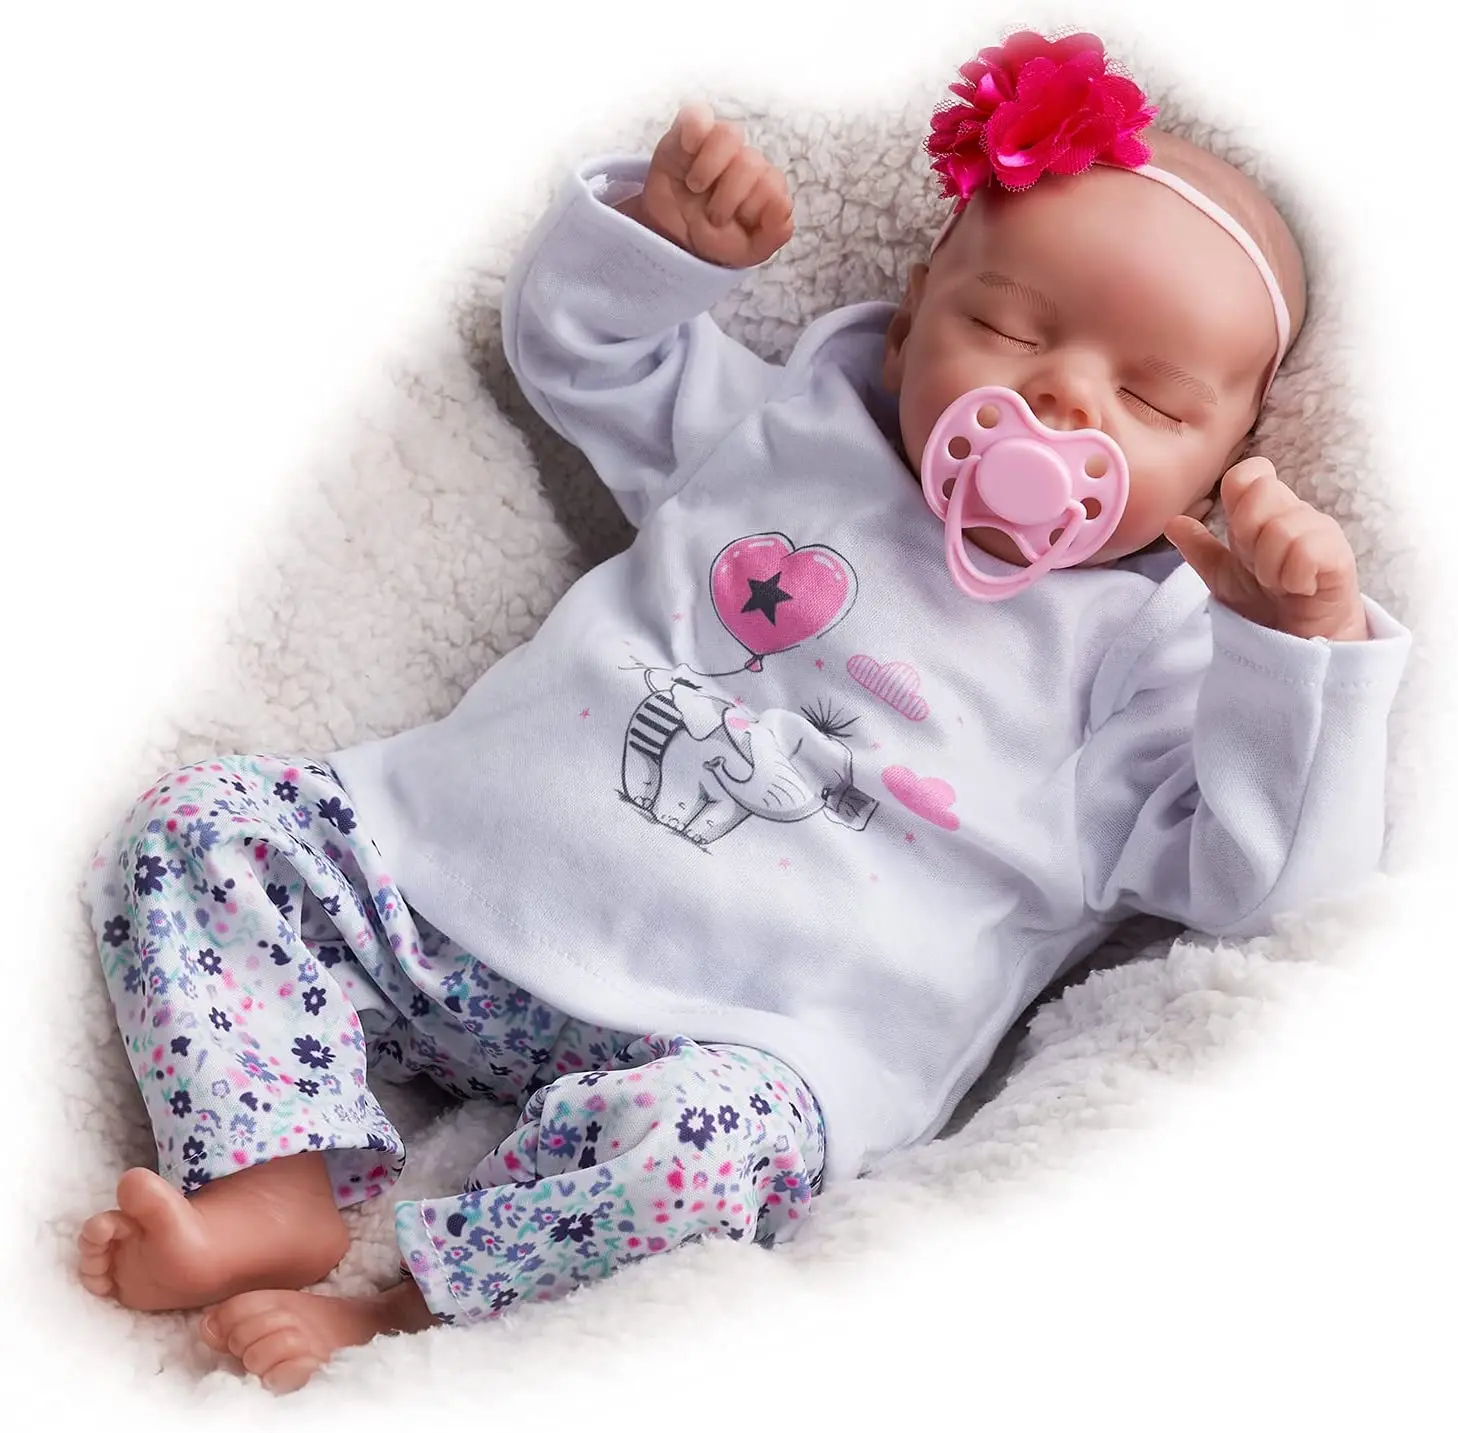 Reborn Dolls Silicone Soft Toddler Lifelike Newborn Baby Doll Toy with Dress 